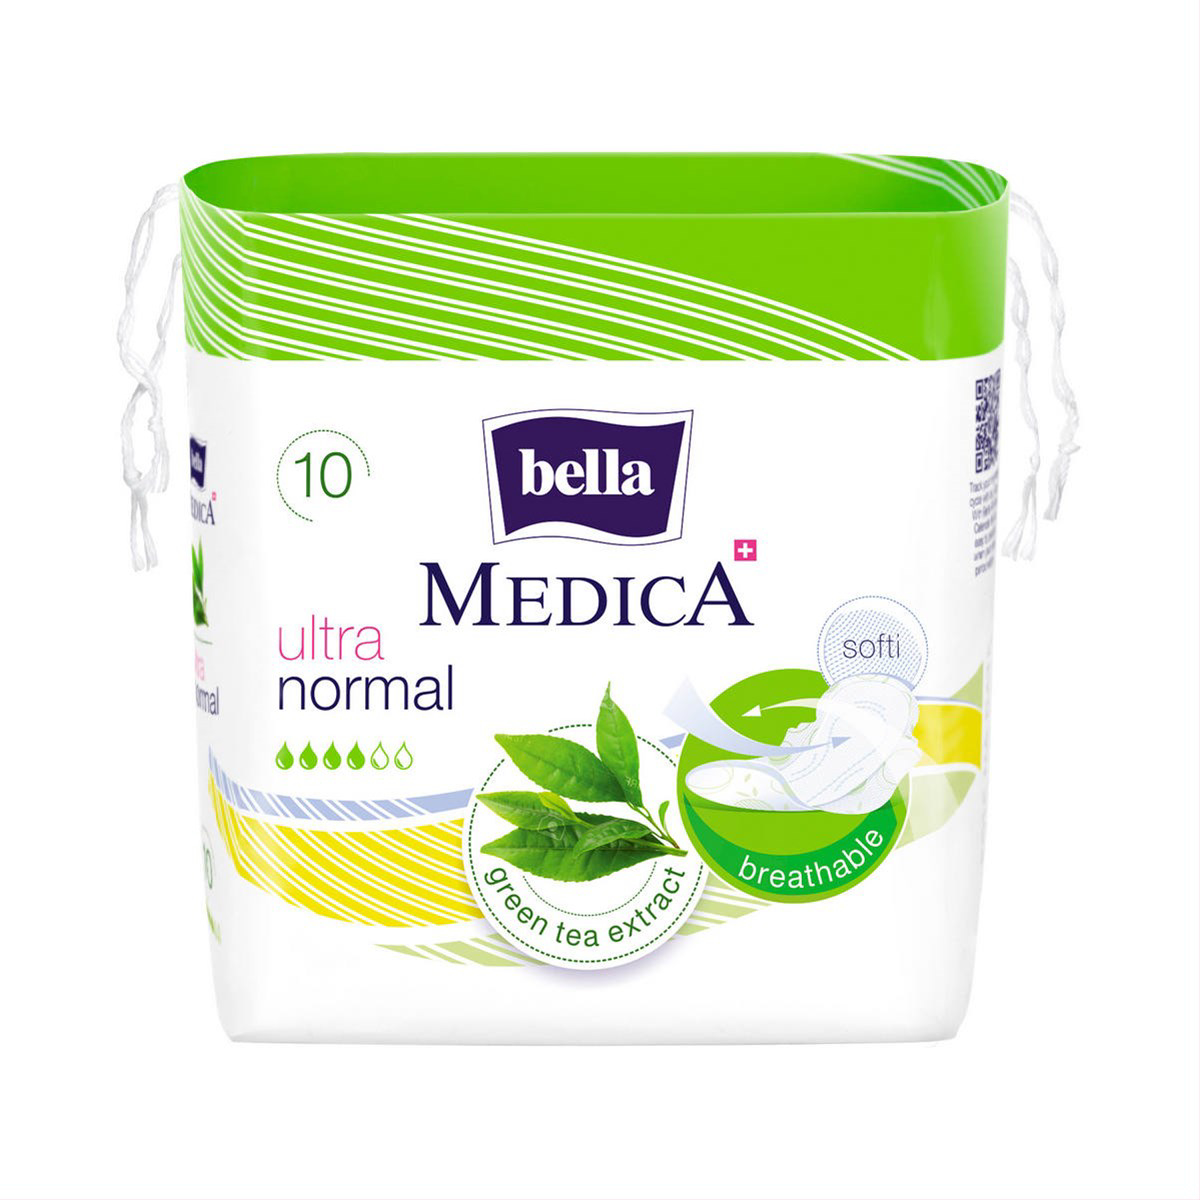 BELLA MEDICA ULTRA NORMAL higieniniai paketai, 10 vnt.